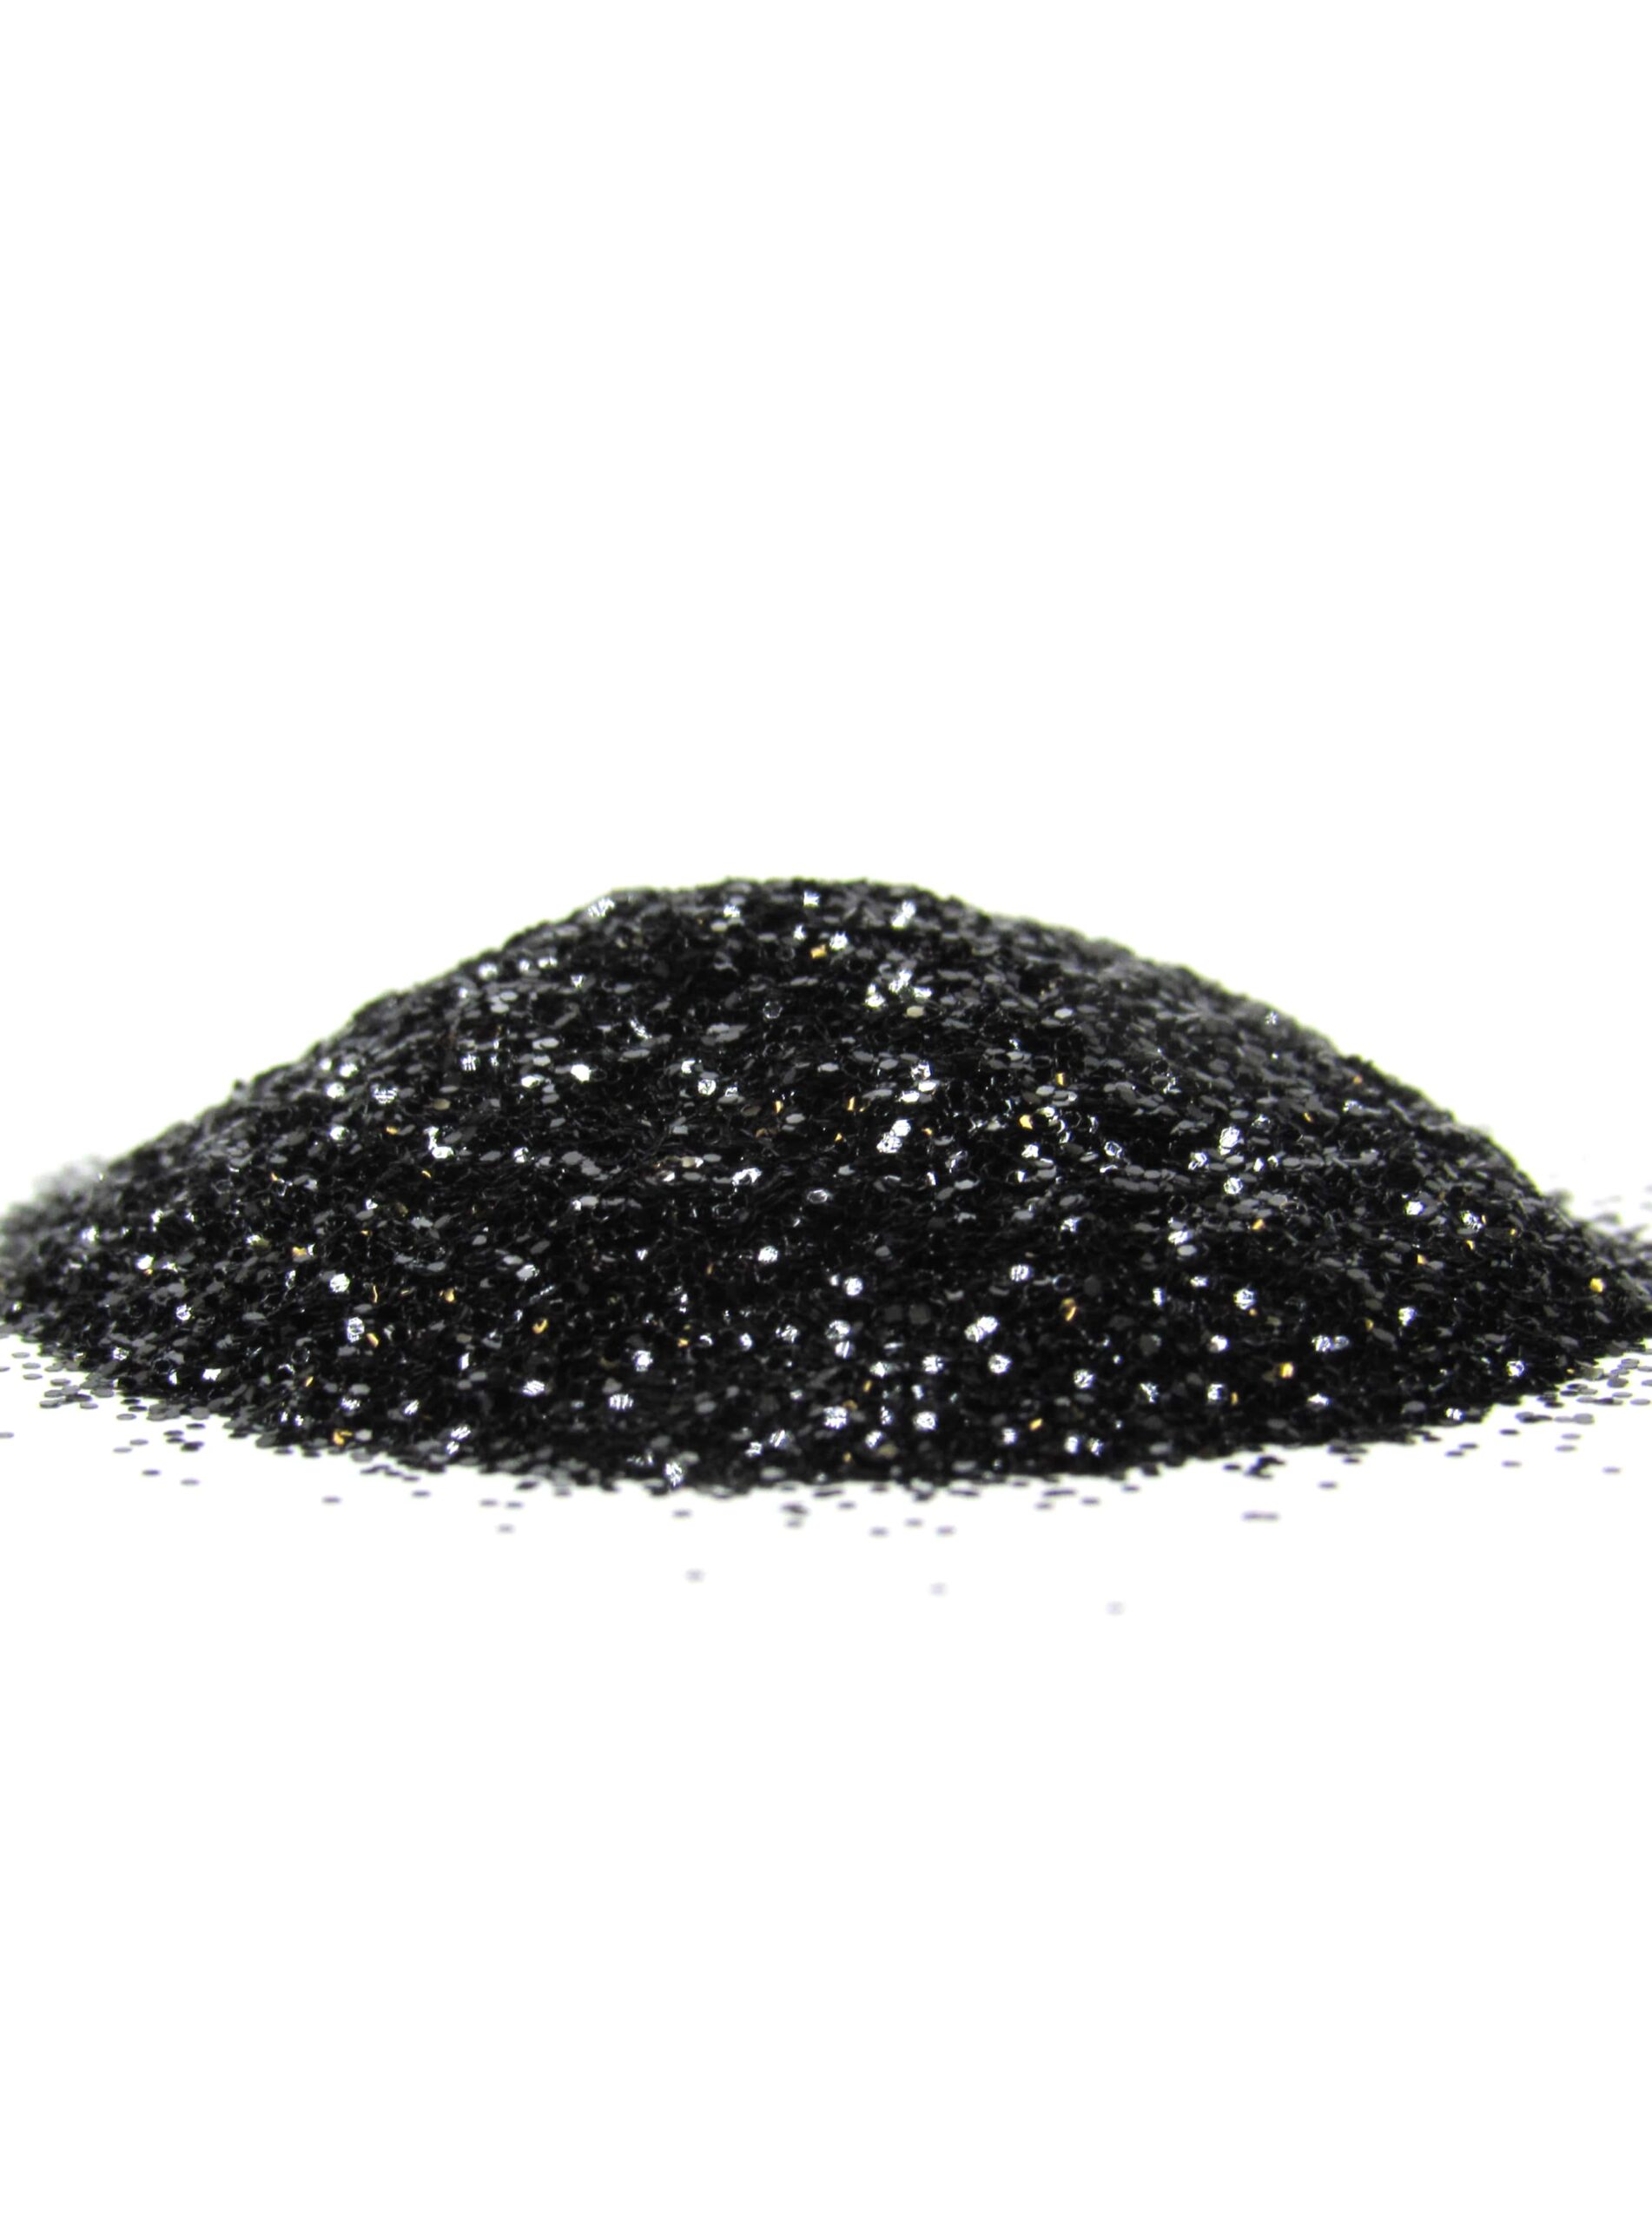 glitter black additive